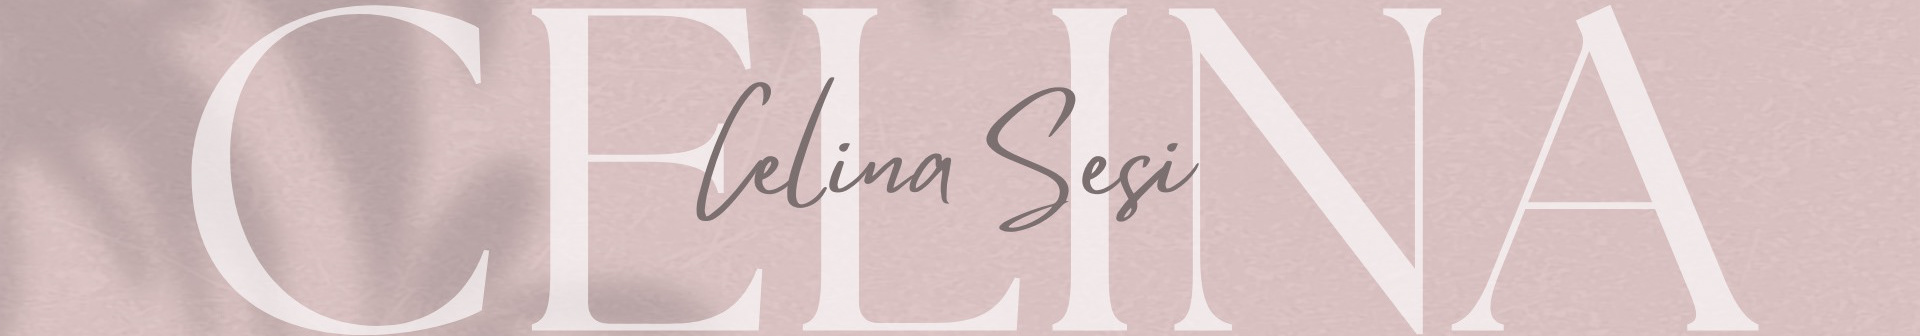 Celina Sesi's profile banner